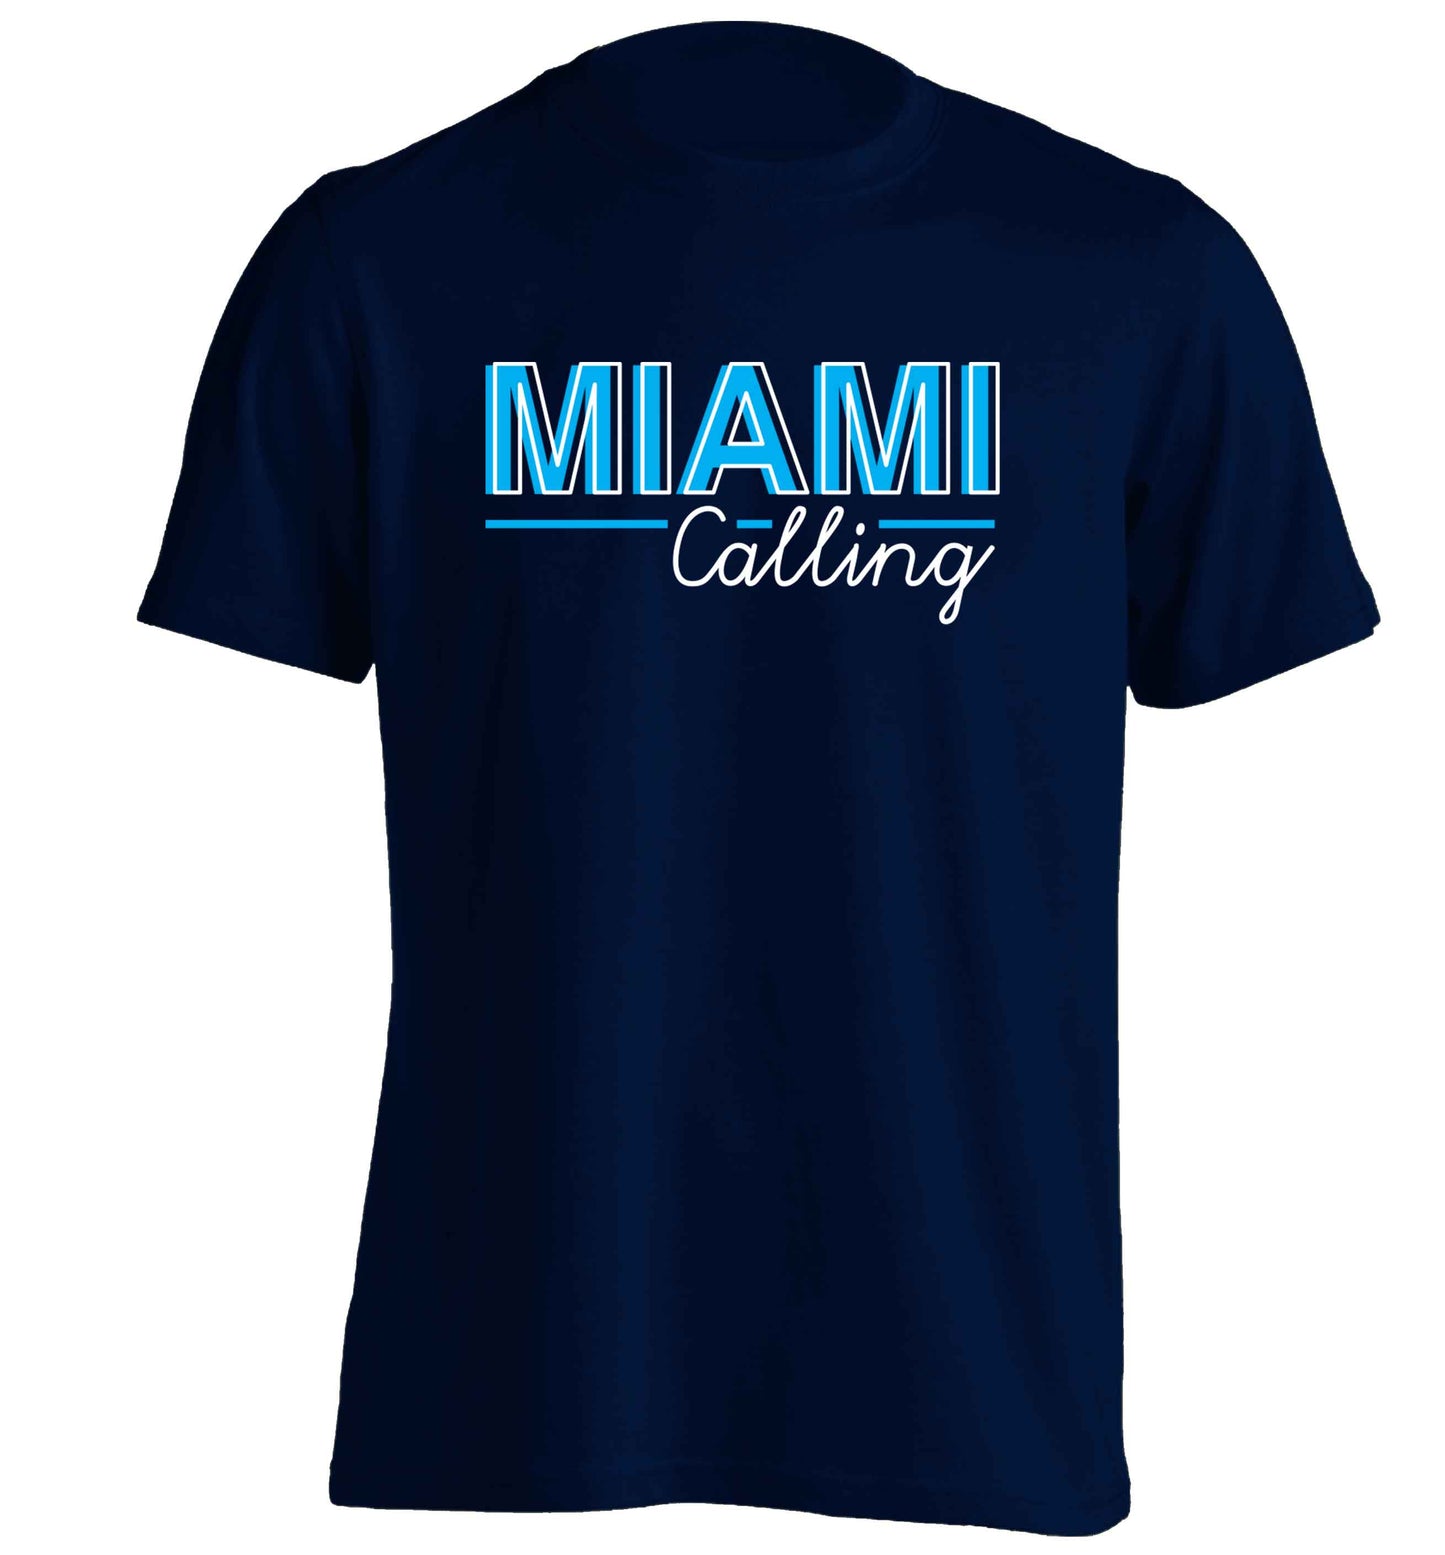 Miami calling adults unisex navy Tshirt 2XL